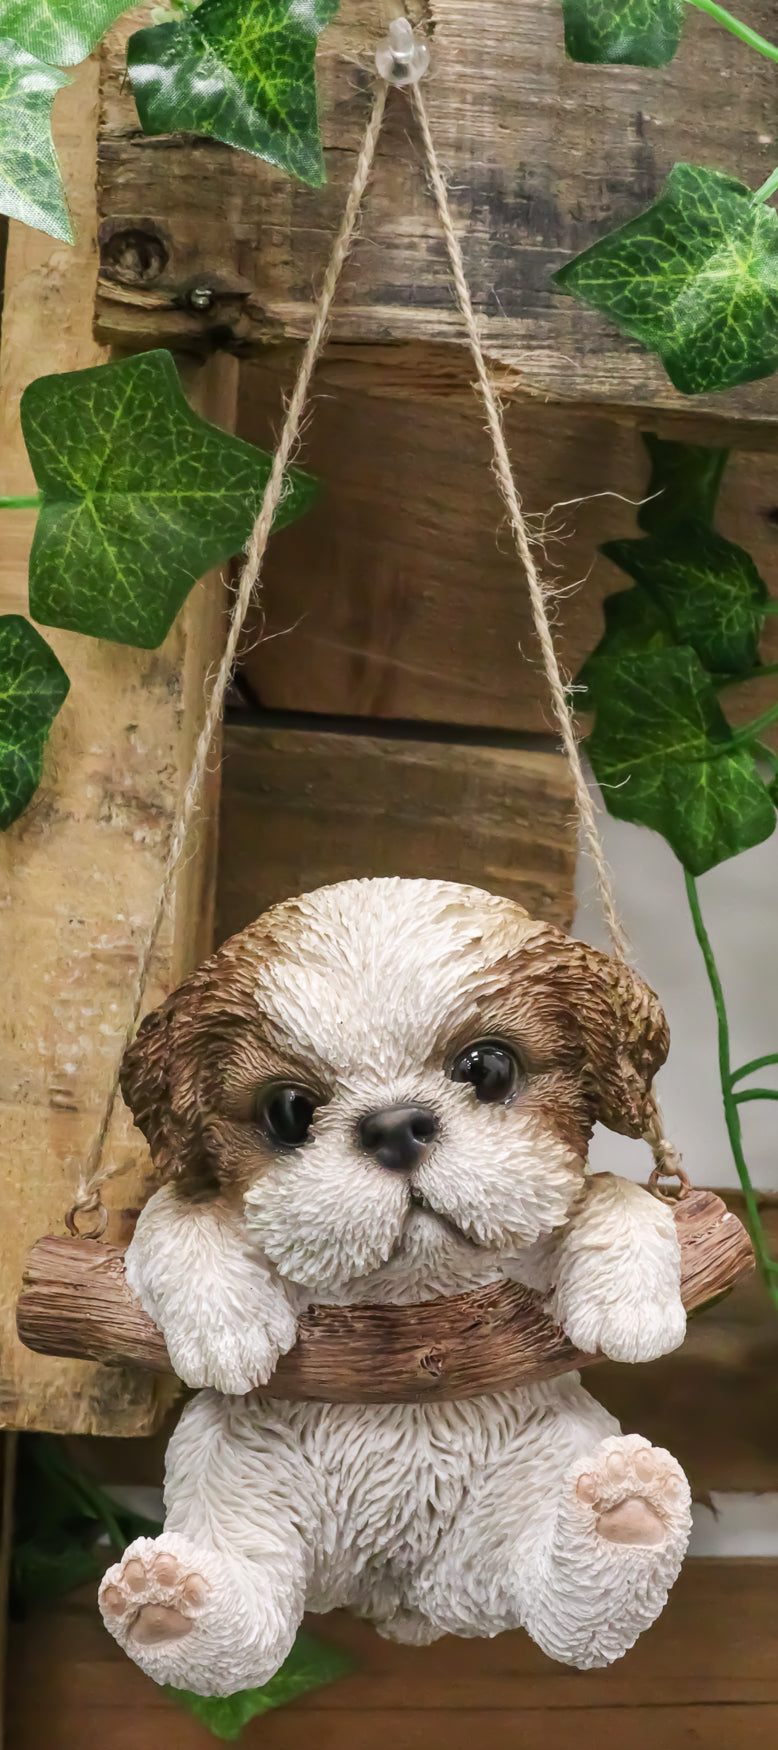 Lifelike Teacup Shih Tzu Puppy Macrame Branch Hanger 5.25"Tall With Jute Strings